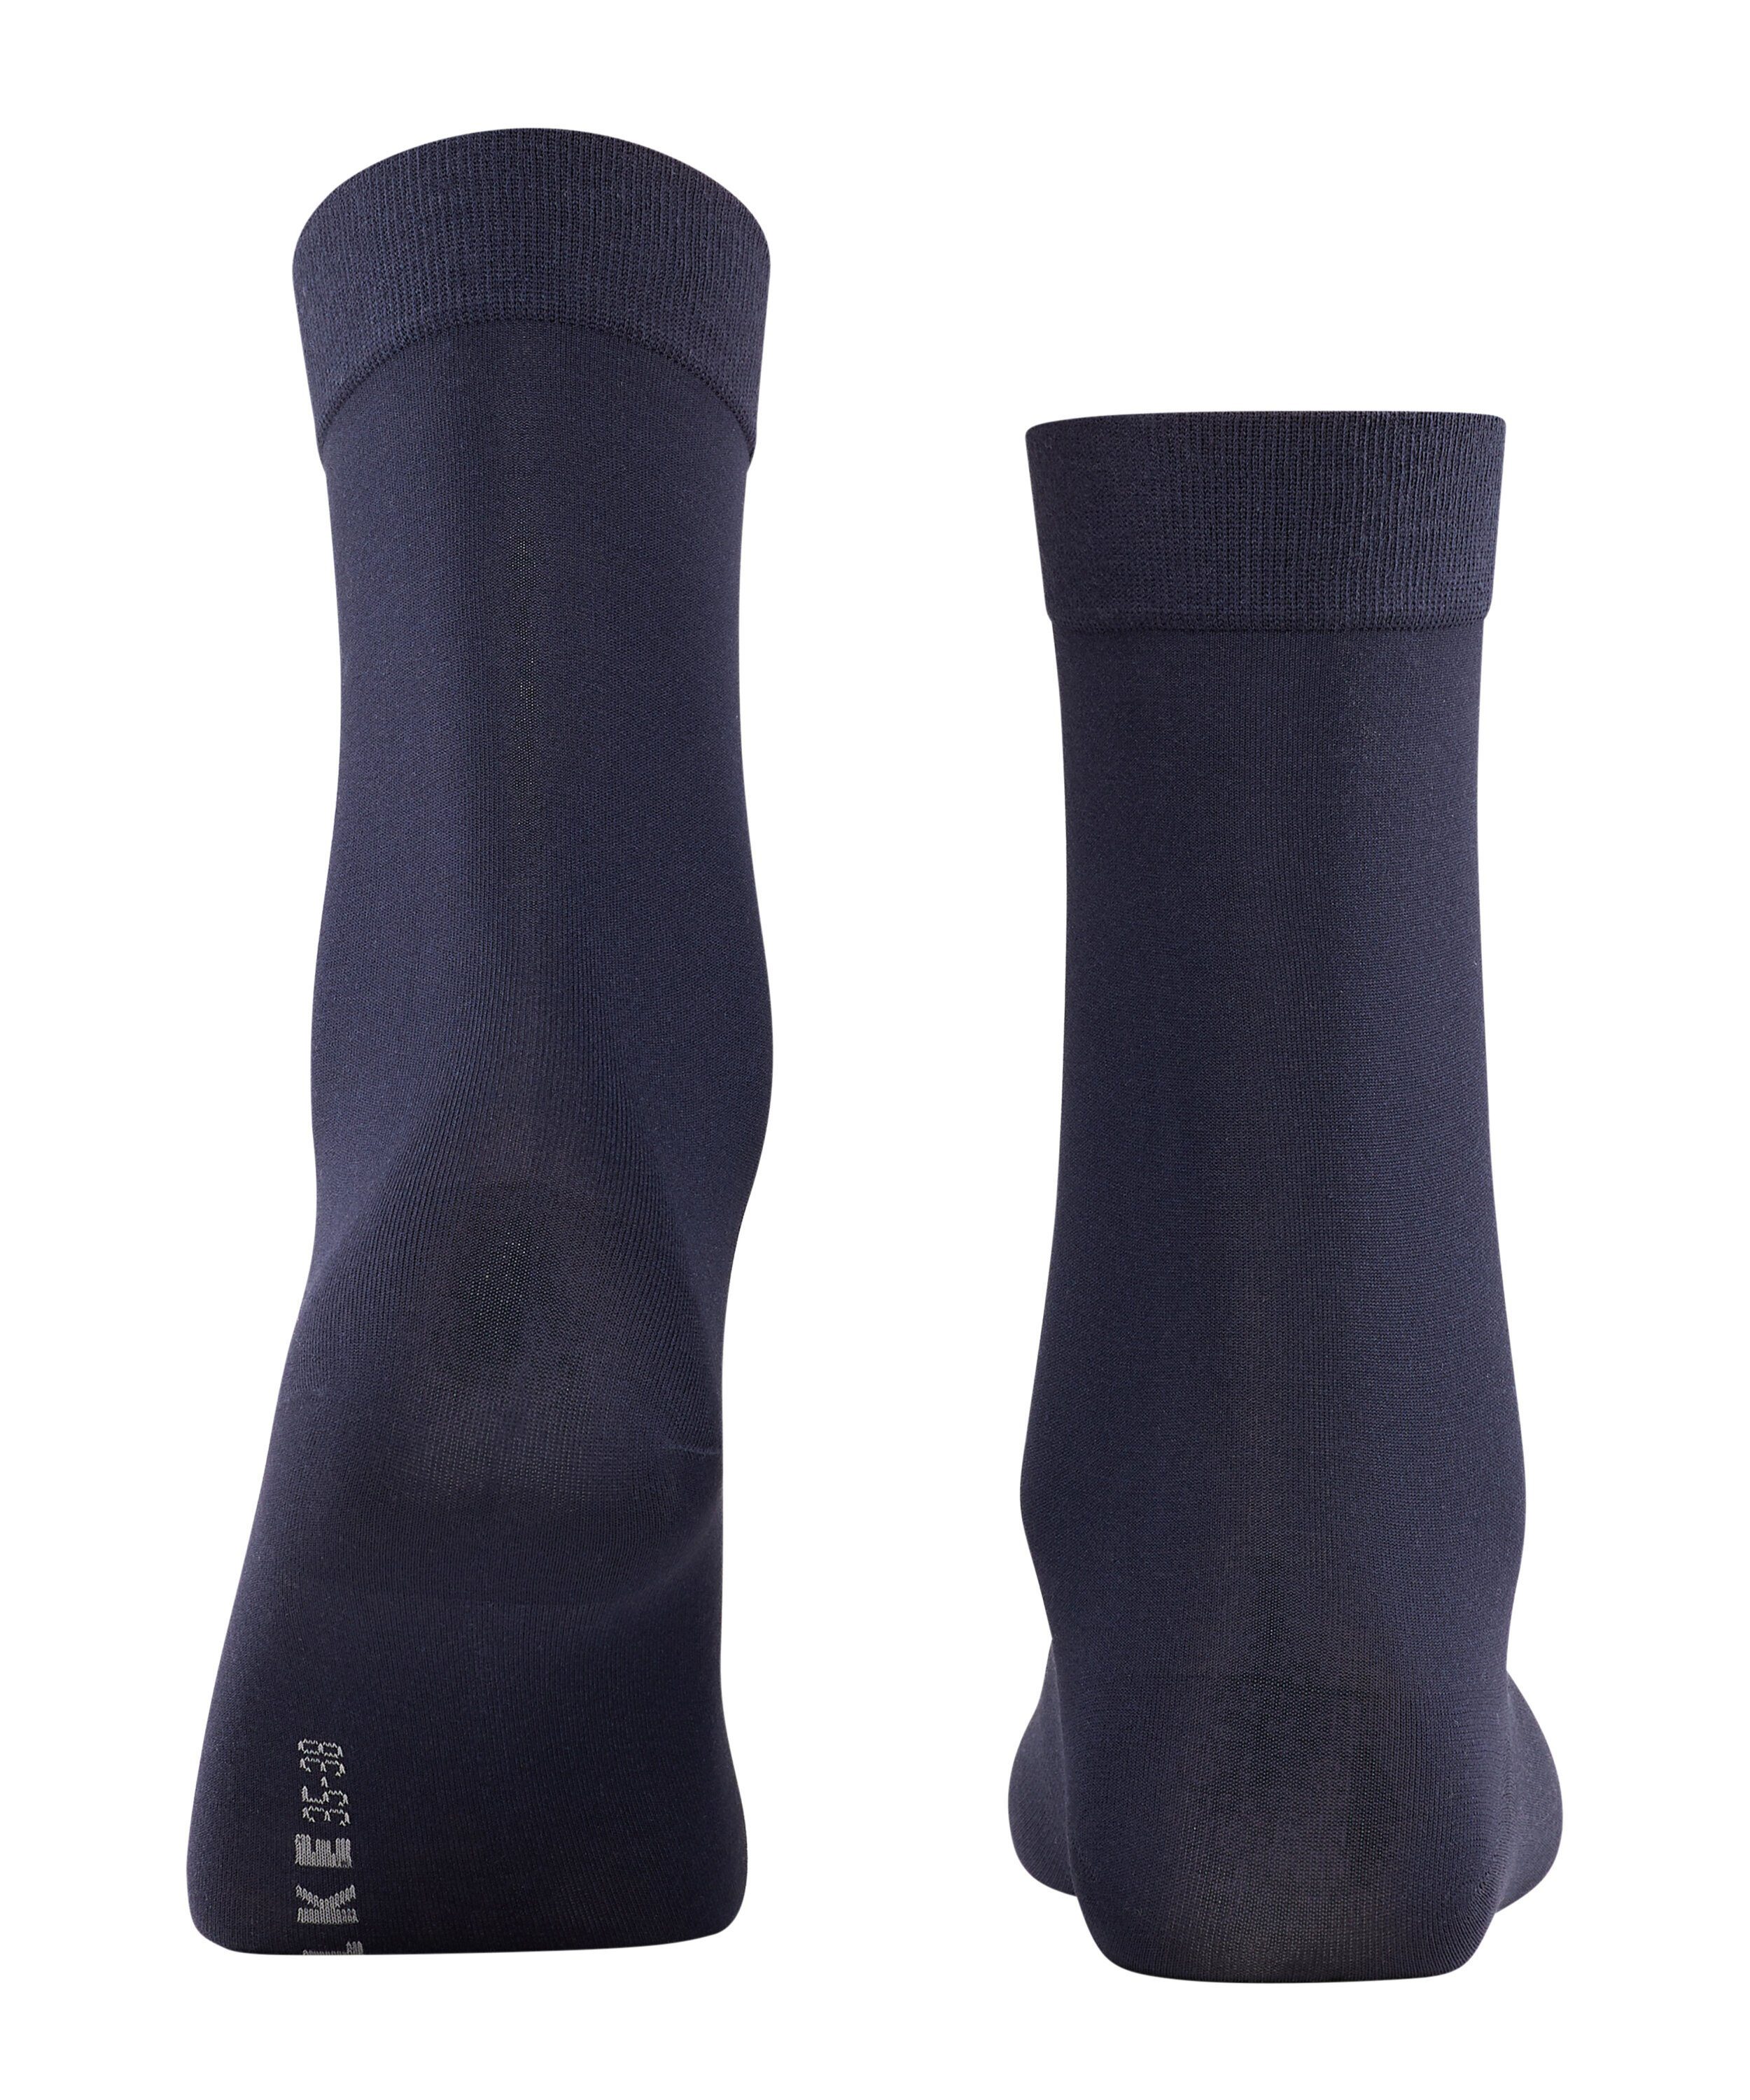 FALKE Socken Cotton Touch navy dark (6379) (1-Paar)